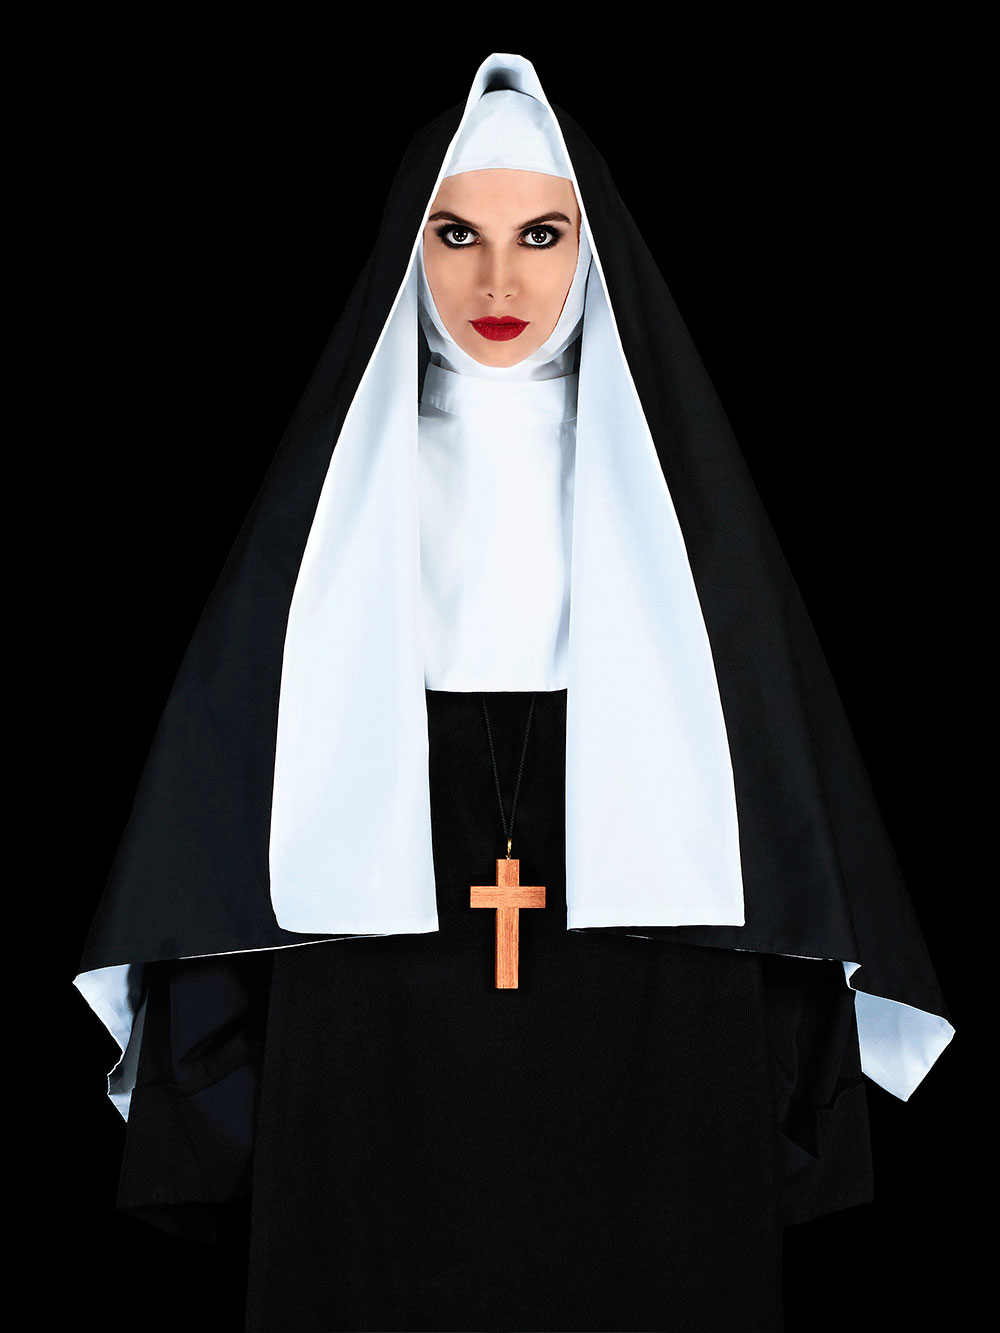 Джессика Риззо монахиня